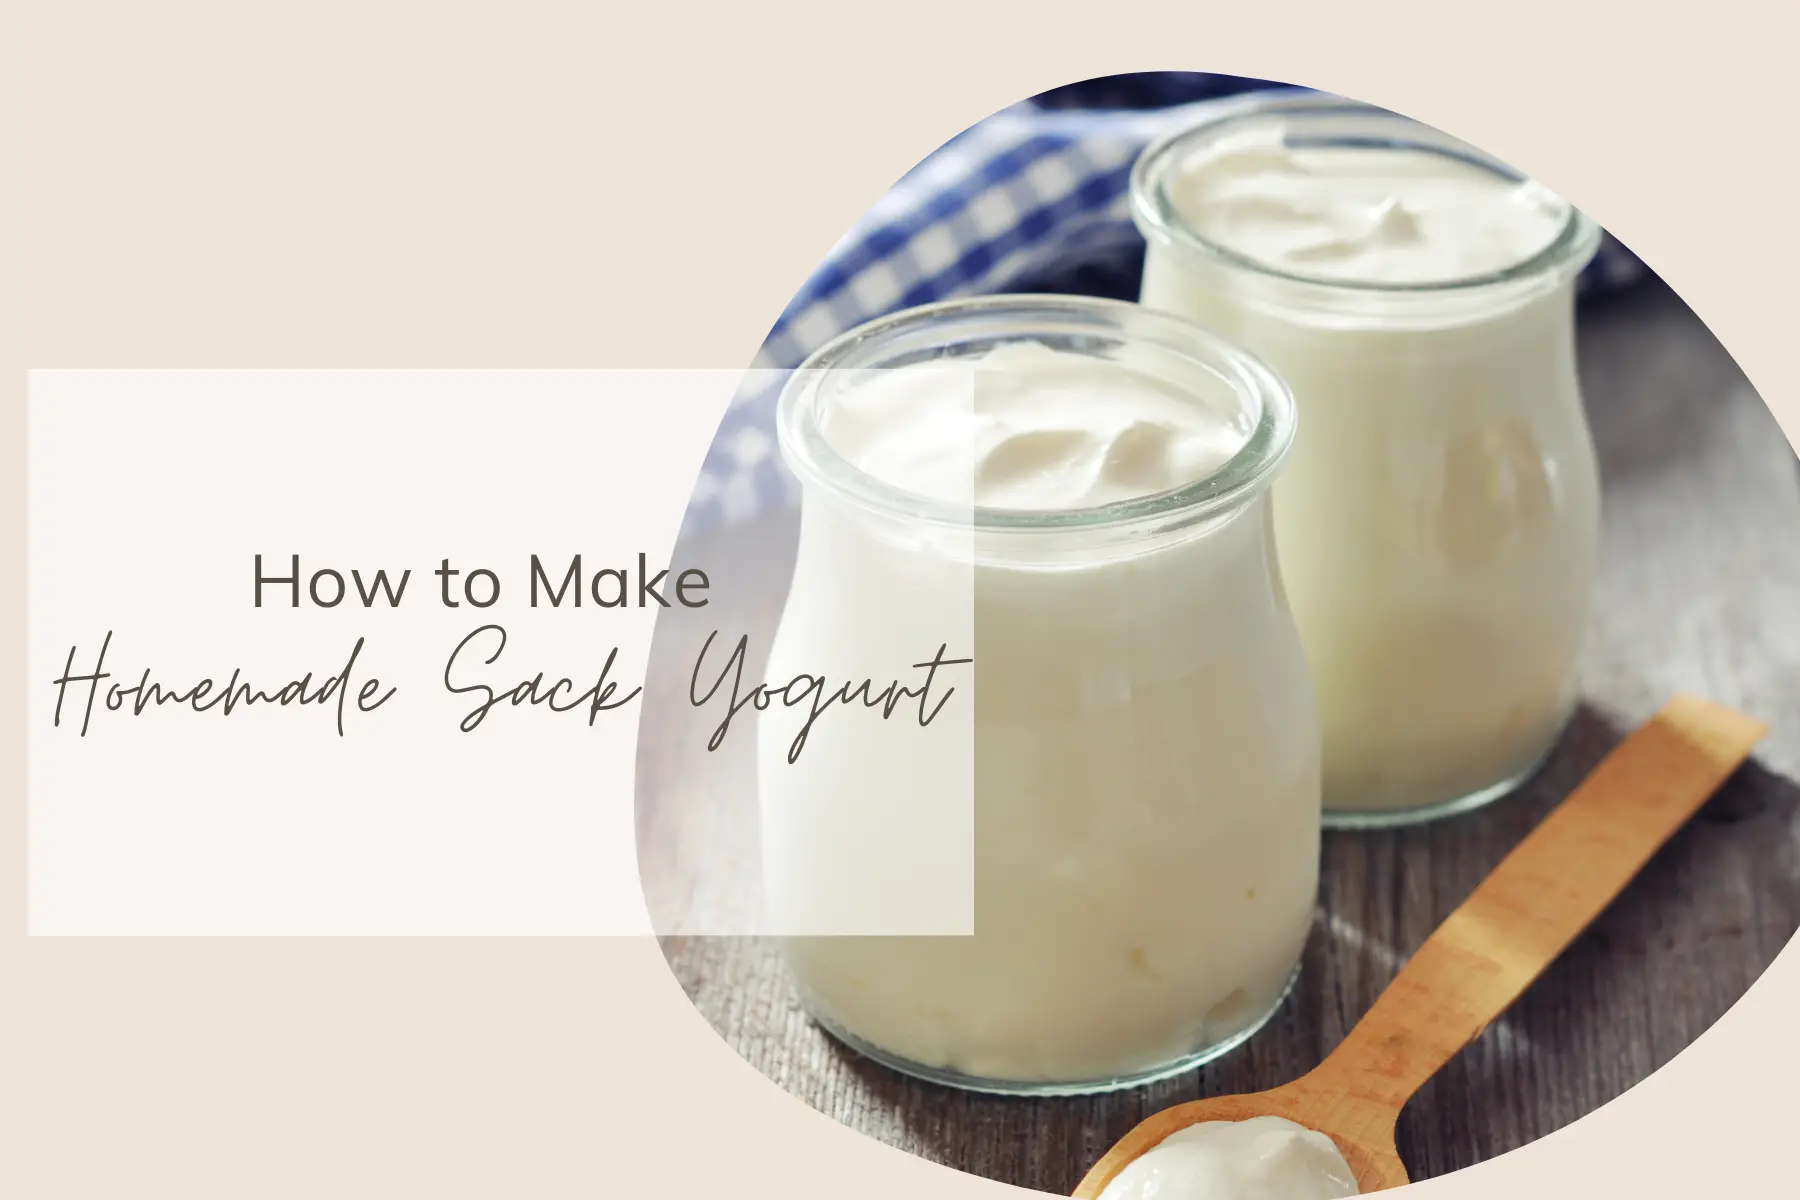 How to Make Homemade Sack Yogurt